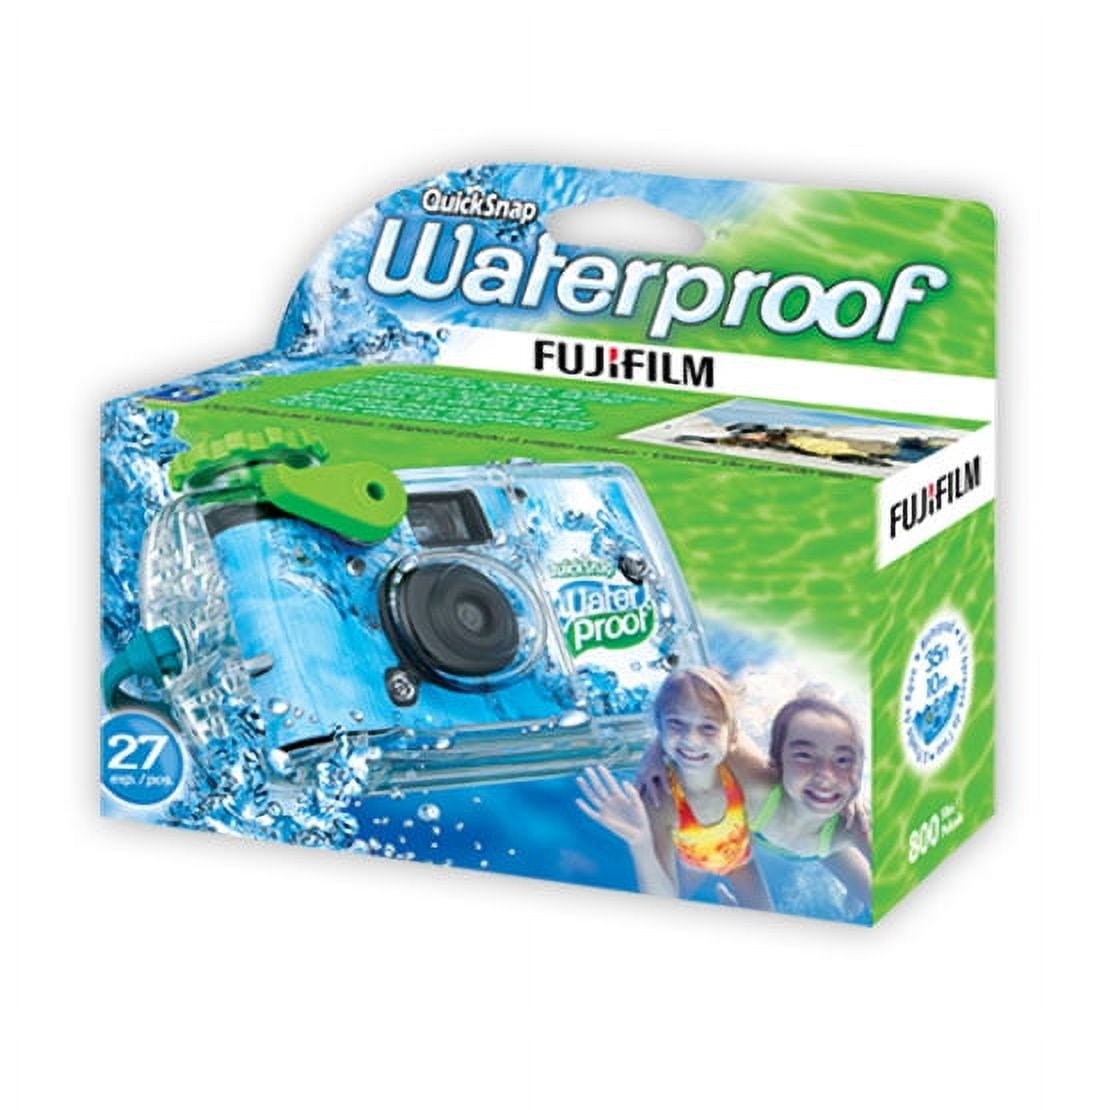 90s Colorful, Cheap Camera: Fujifilm Quicksnap 800 Waterproof Review